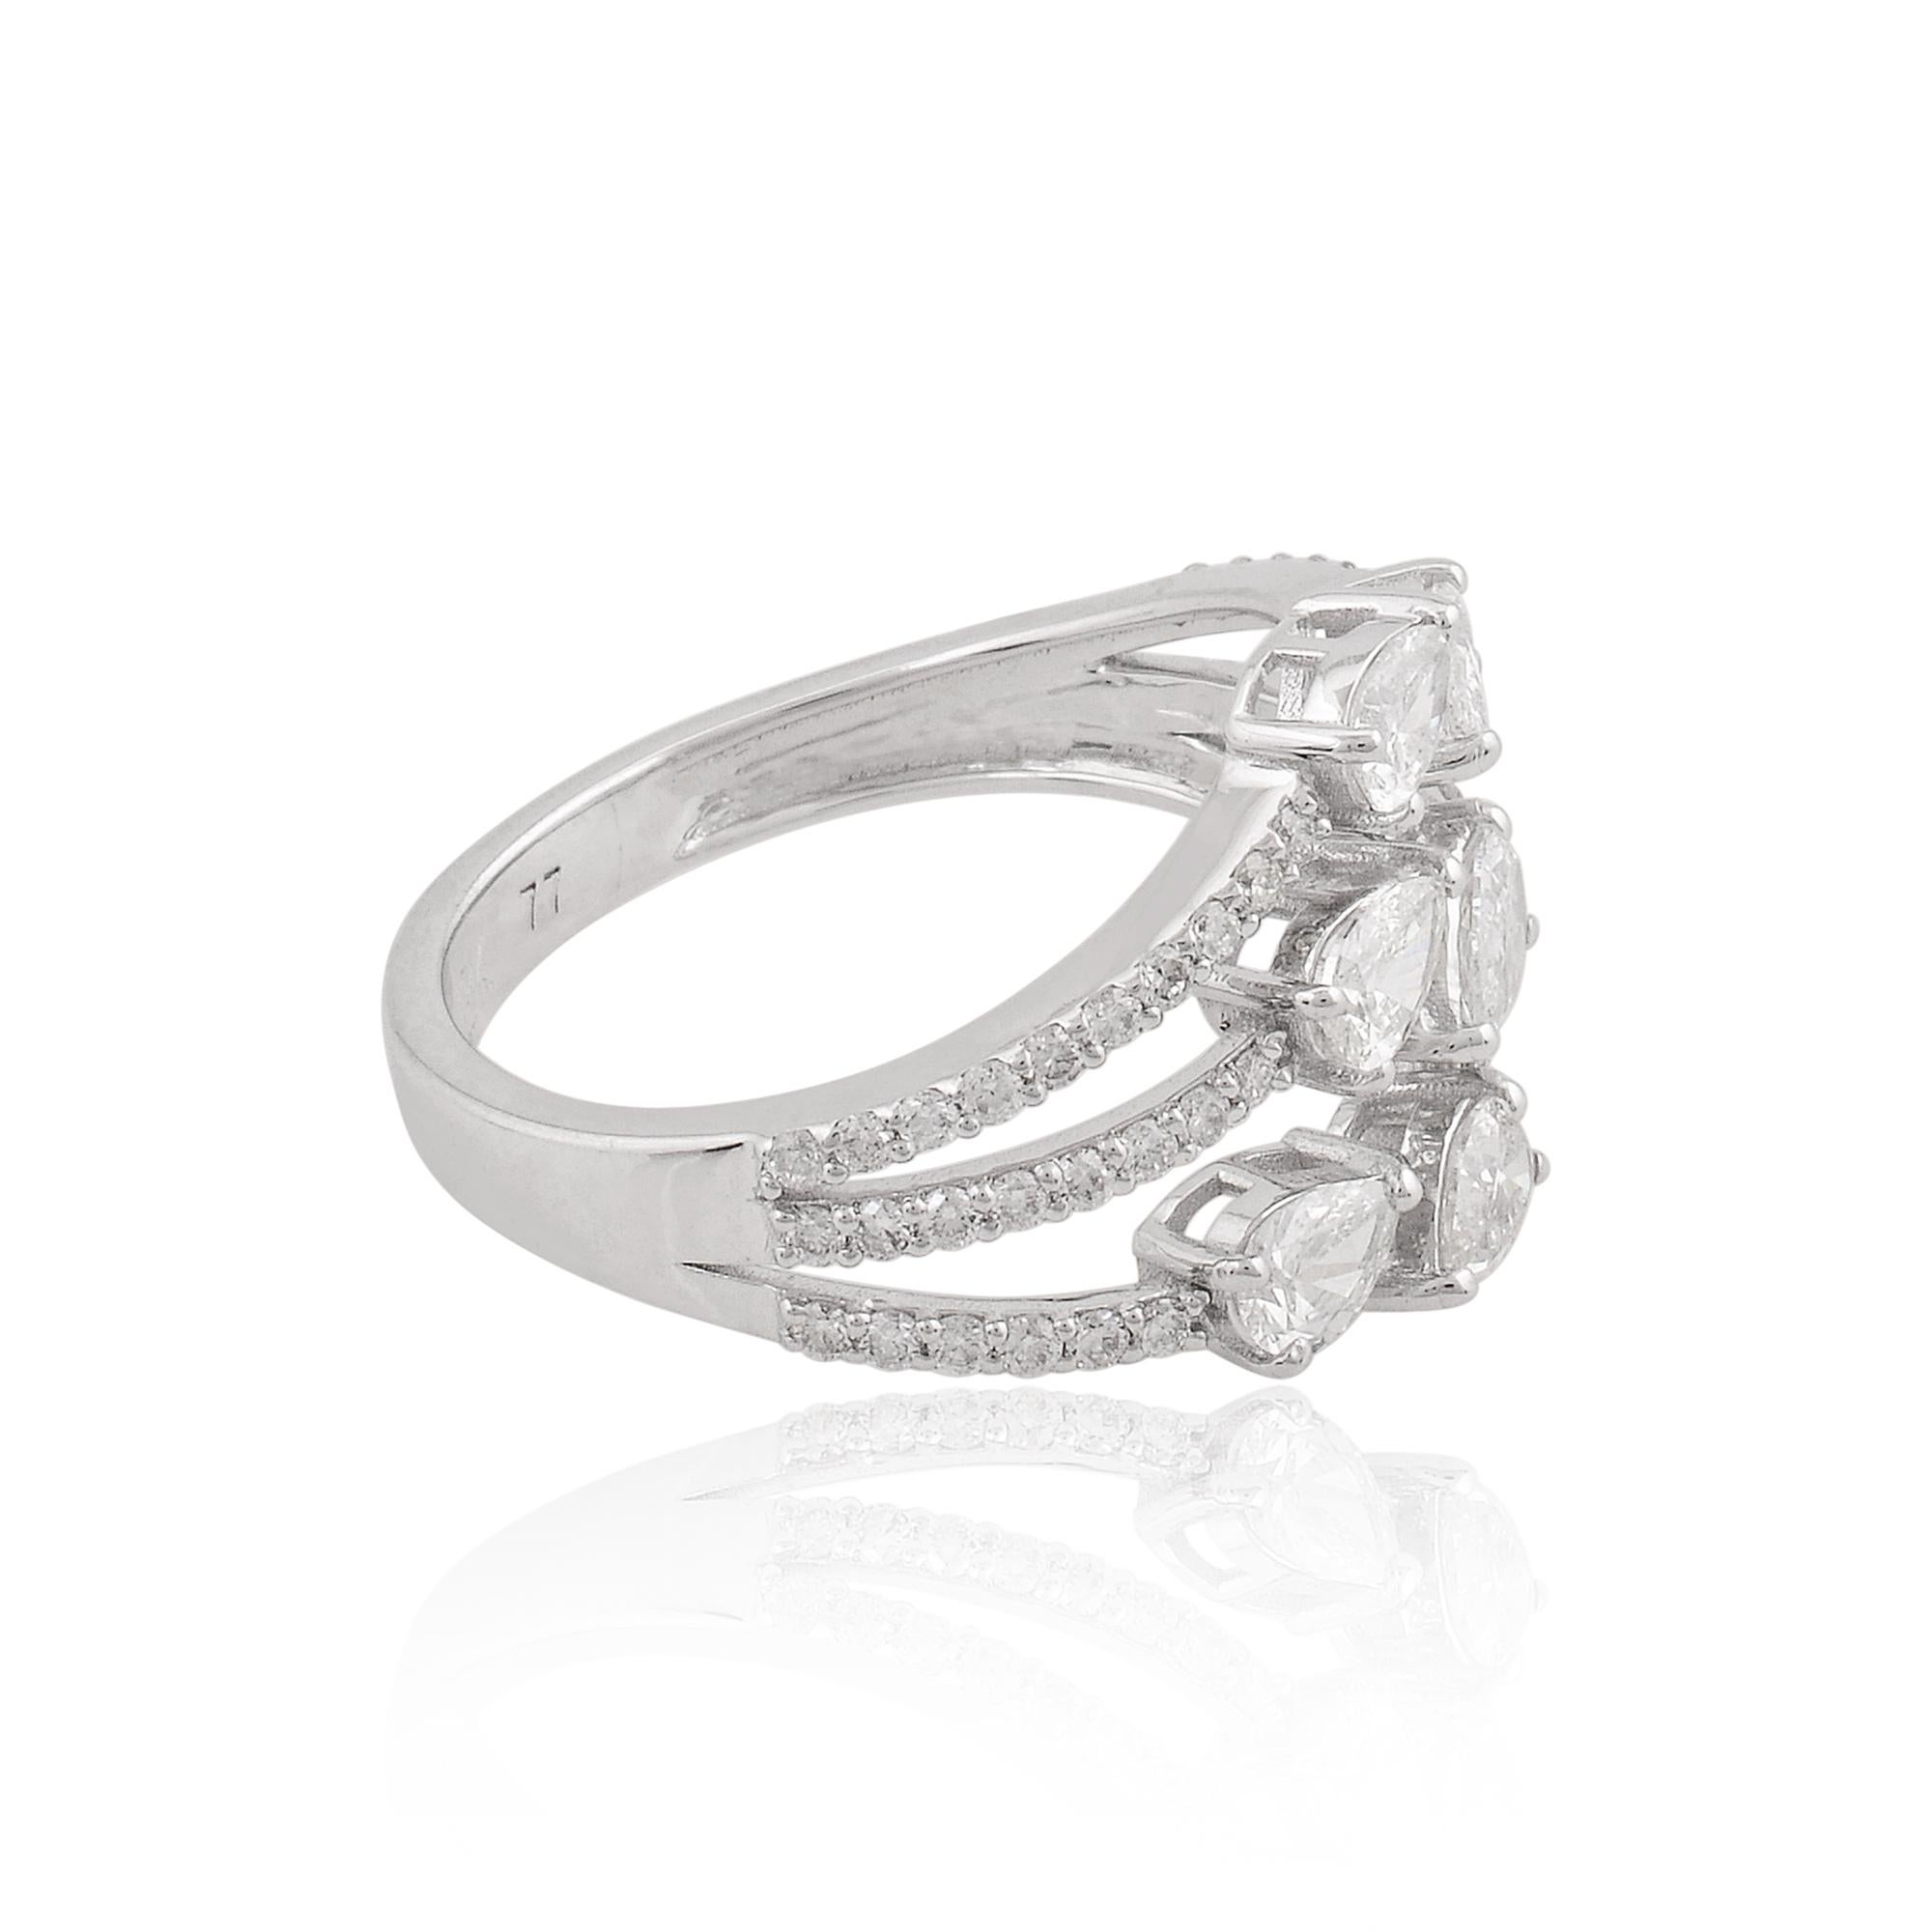 For Sale:  1.3 Carat SI Clarity HI Color Pear Diamond Cuff Ring 18 Karat White Gold Jewelry 2